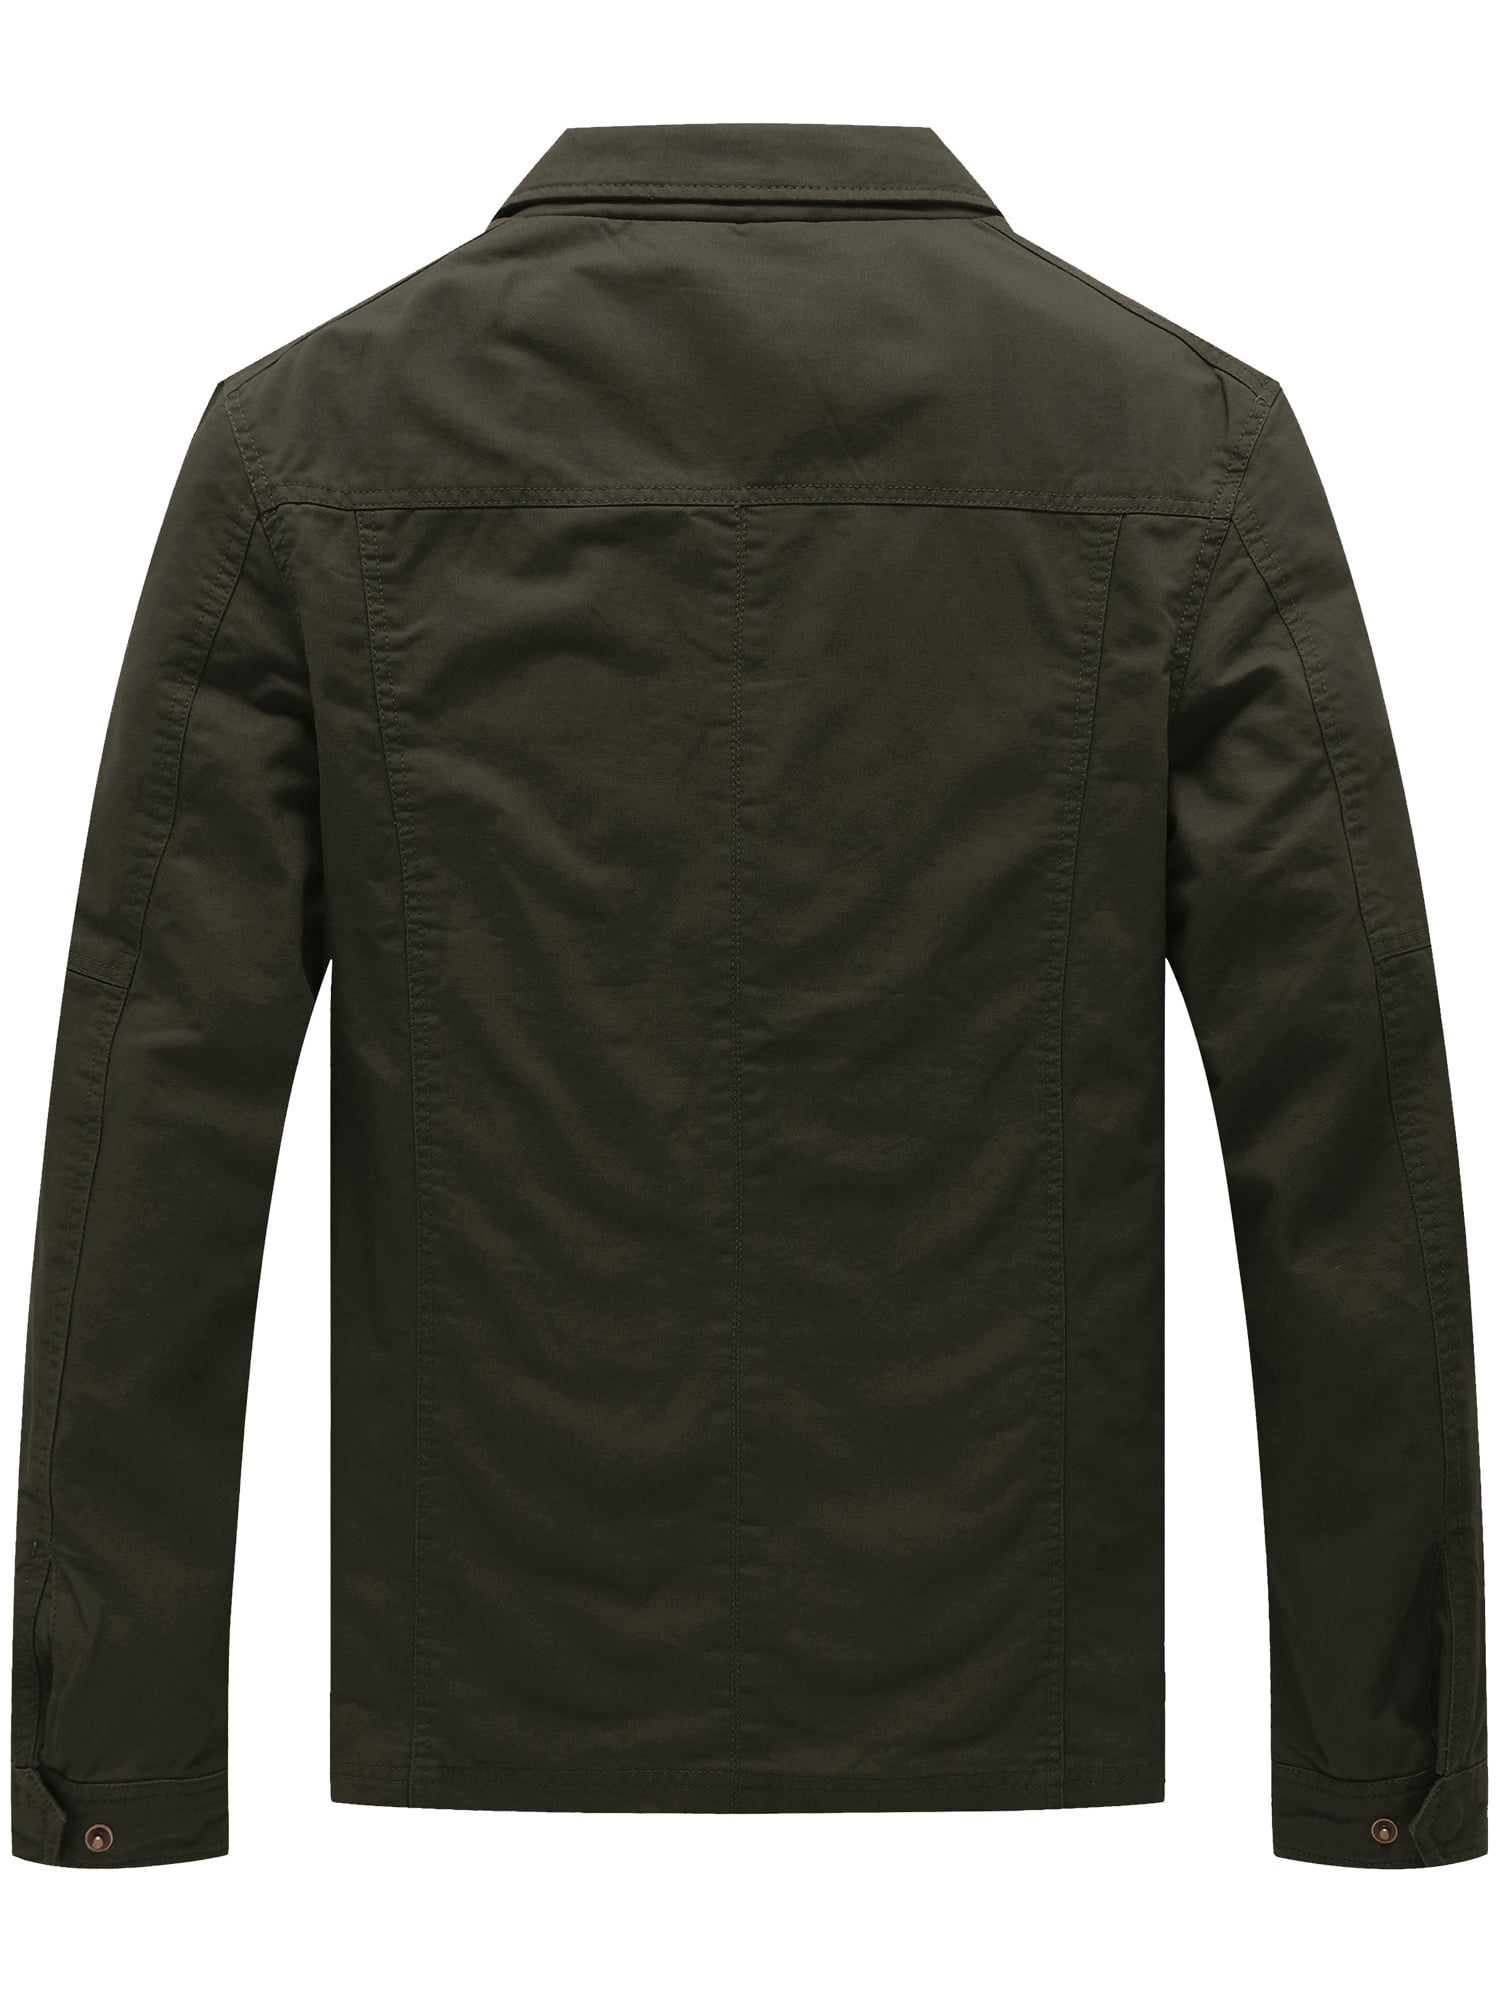 WenVen Men's Jacket Lightweight Long Sleeve Bomber Coat Green L